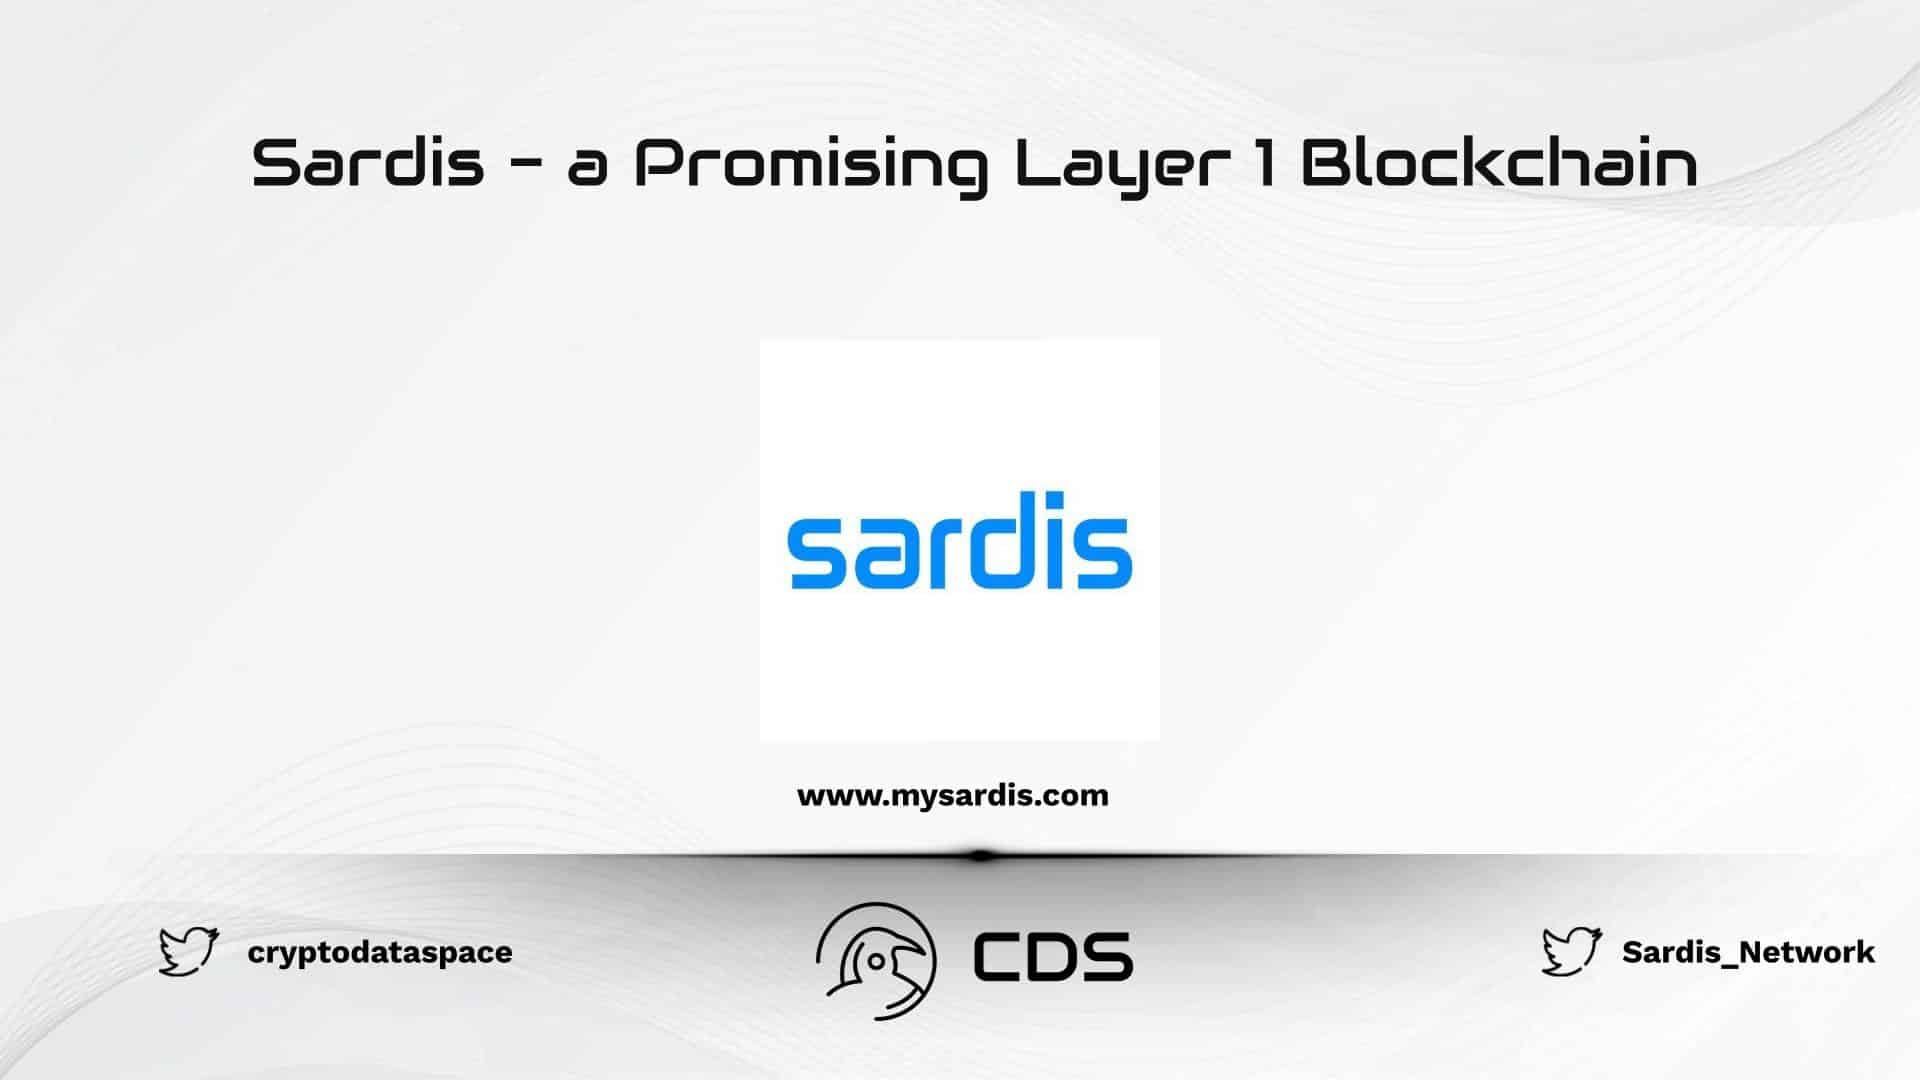 Sardis - a Promising Layer 1 Blockchain